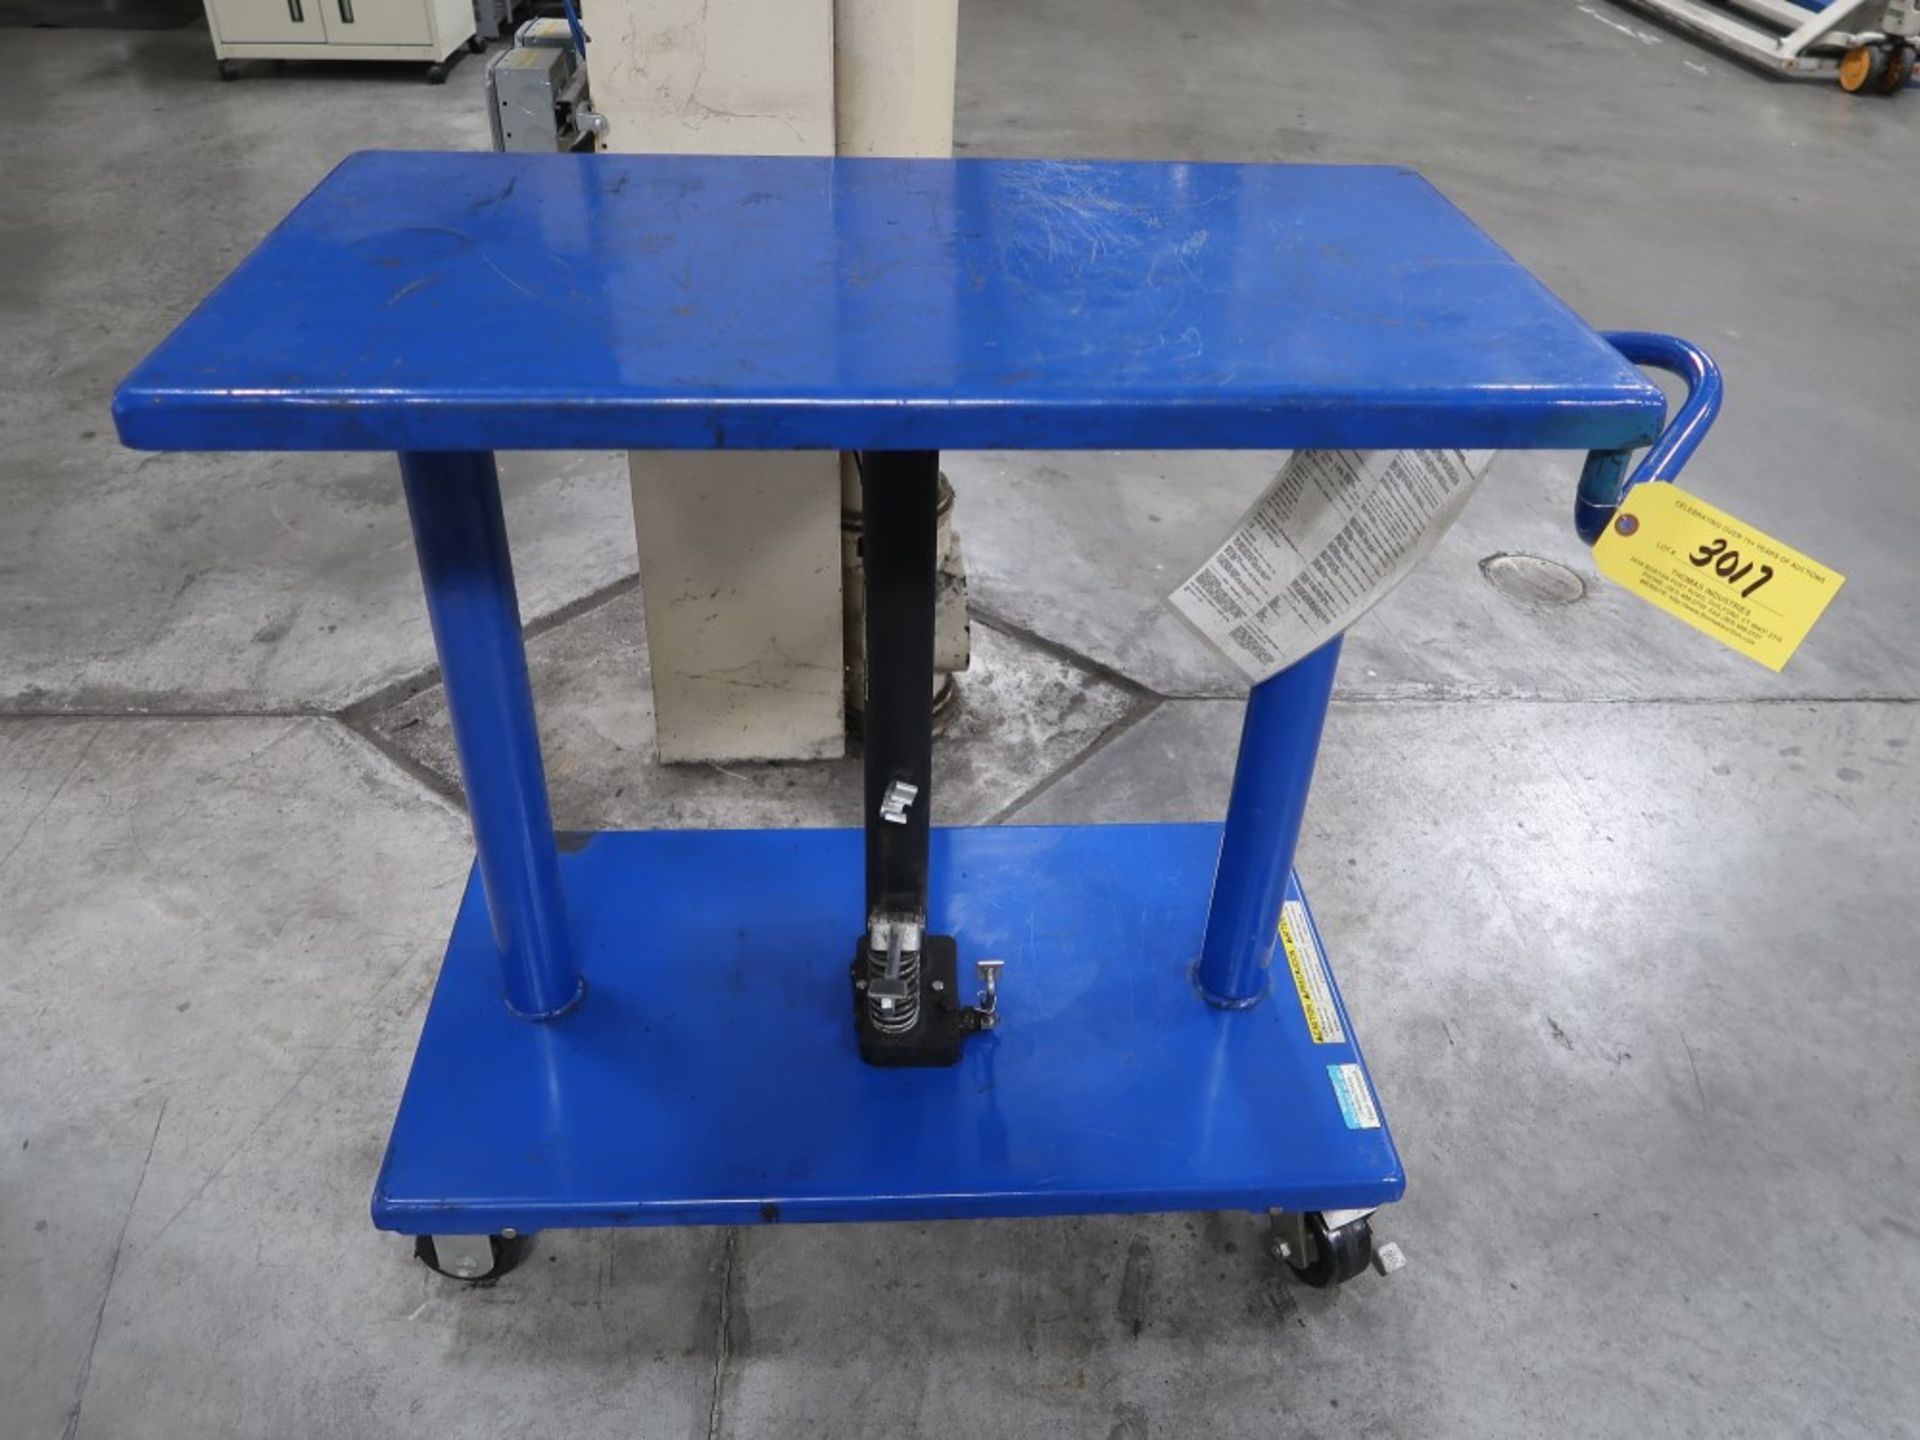 Vestil Hydraulic Lift Table 1,000 Lb Cap, 36" x 20" Platform - Image 2 of 3